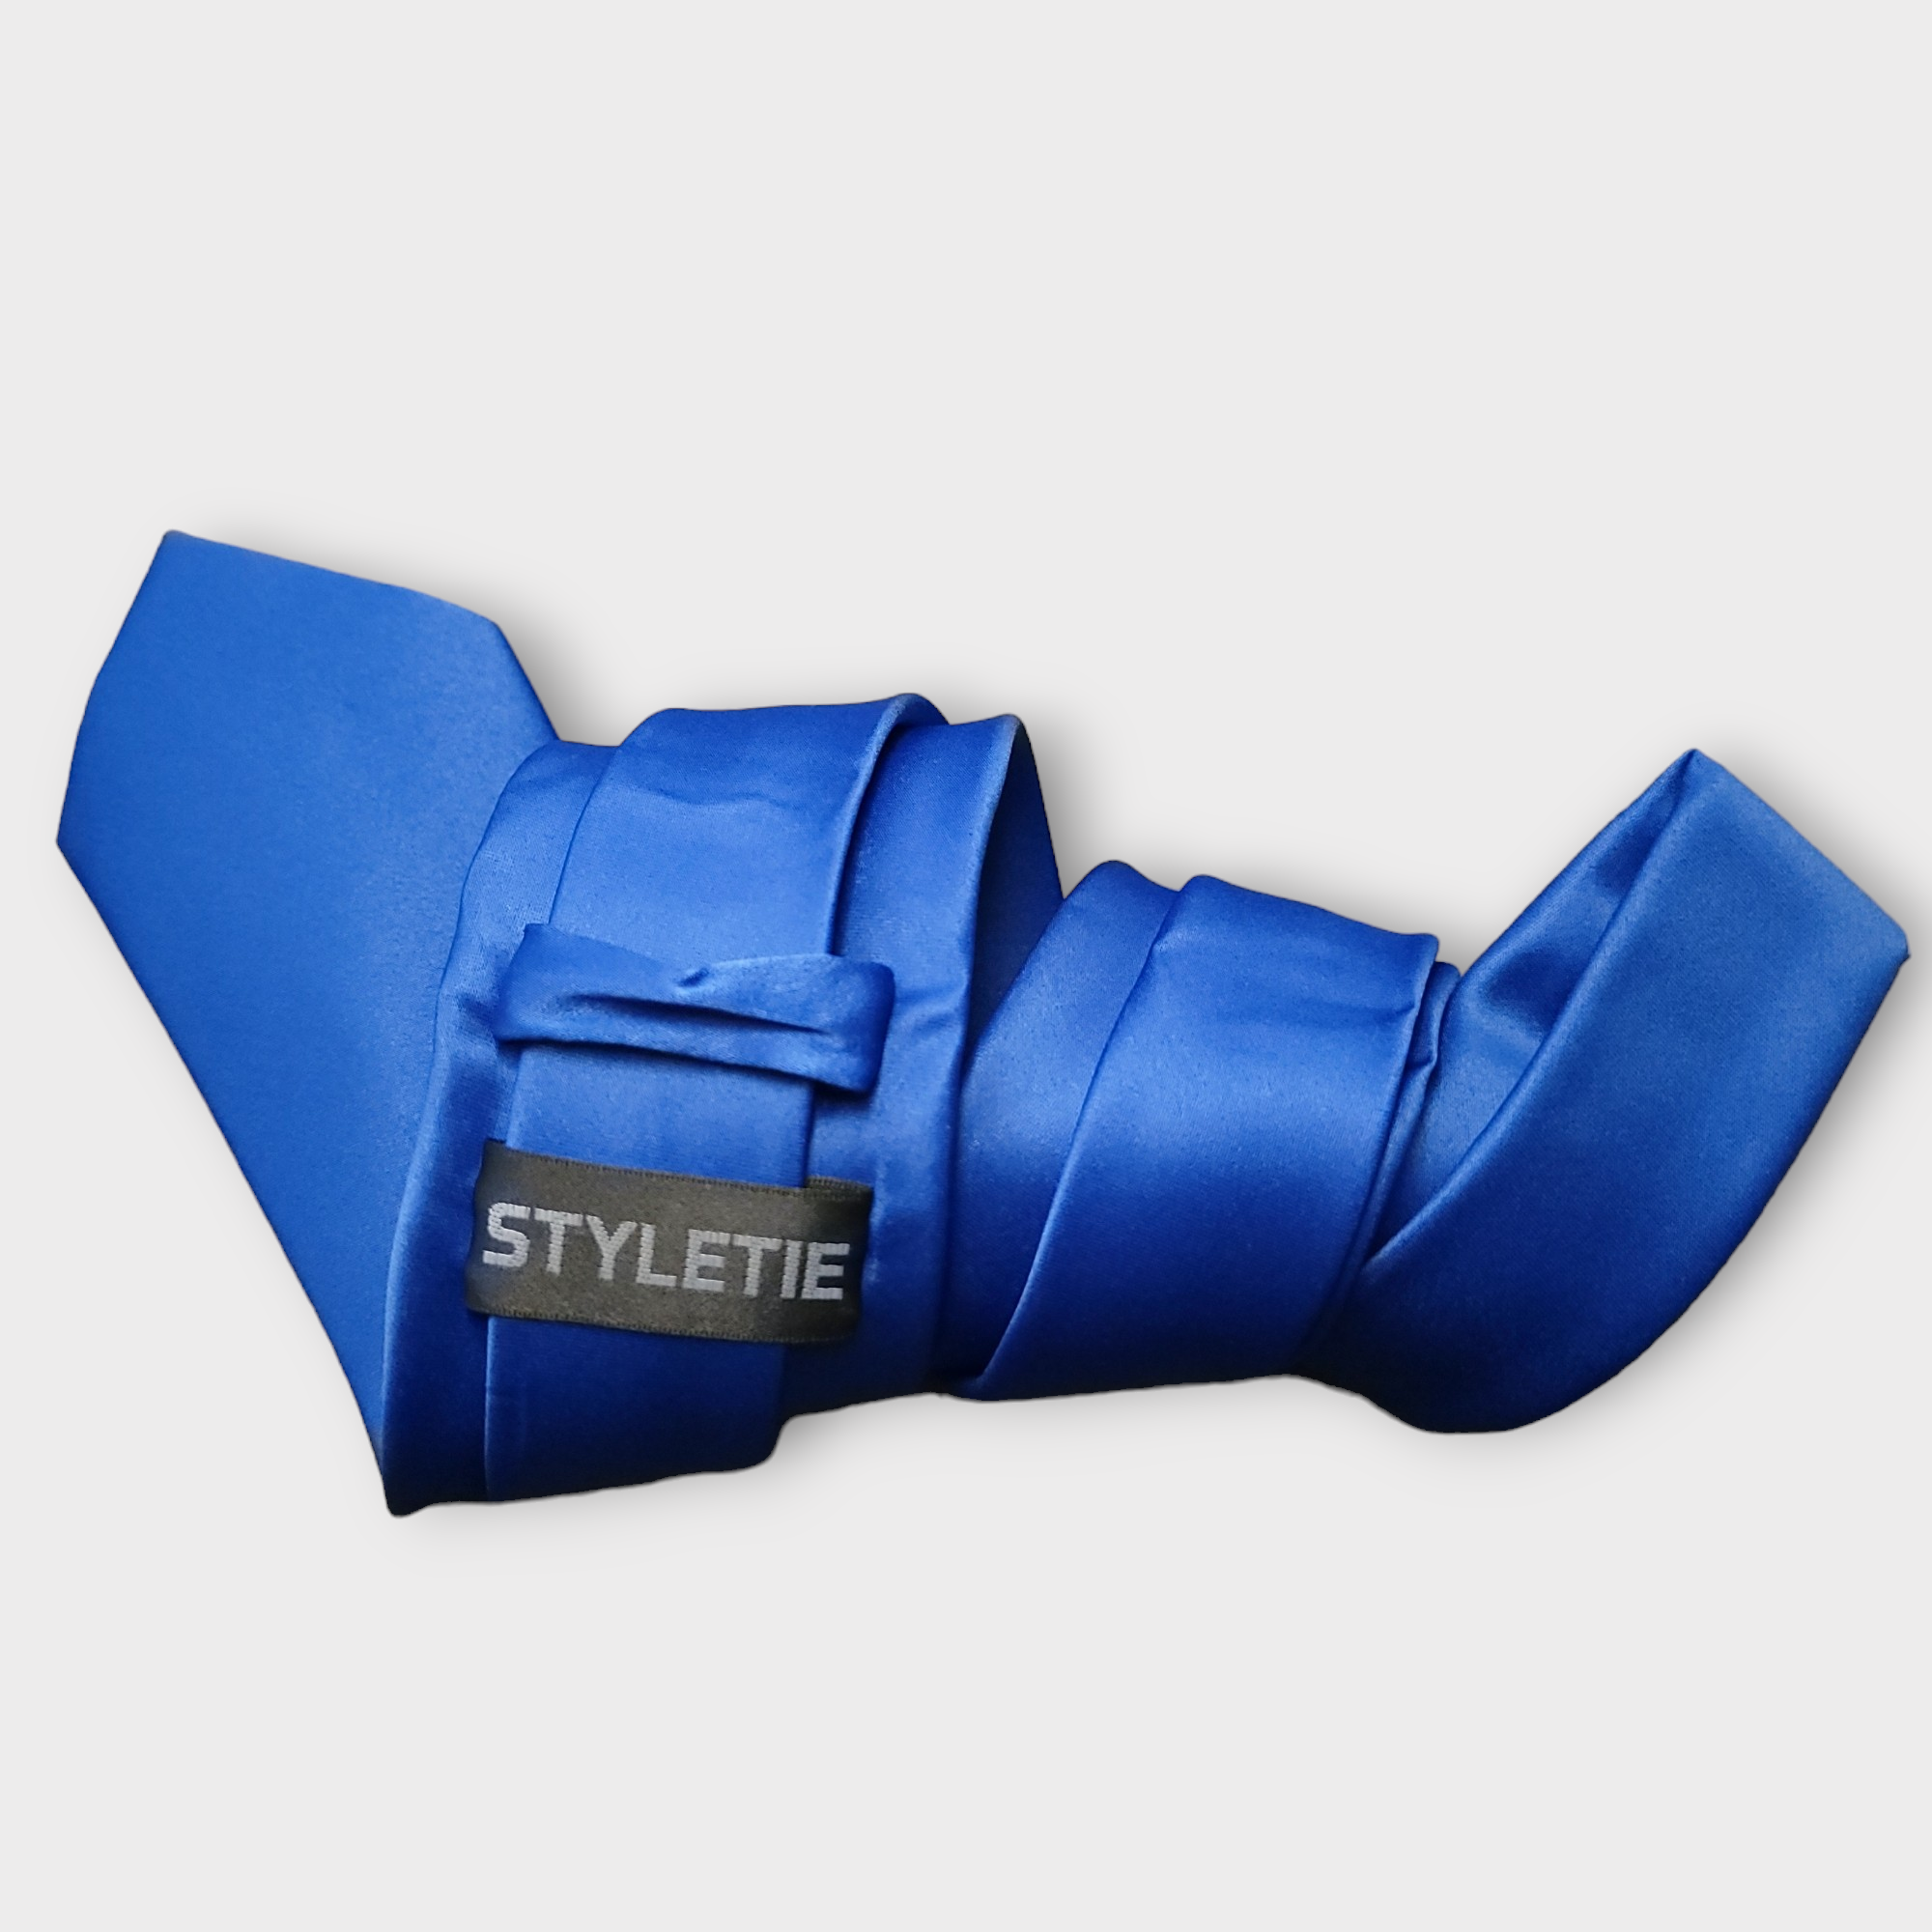 Royal Blue Solid Silk Tie Pocket Square Cufflink Set